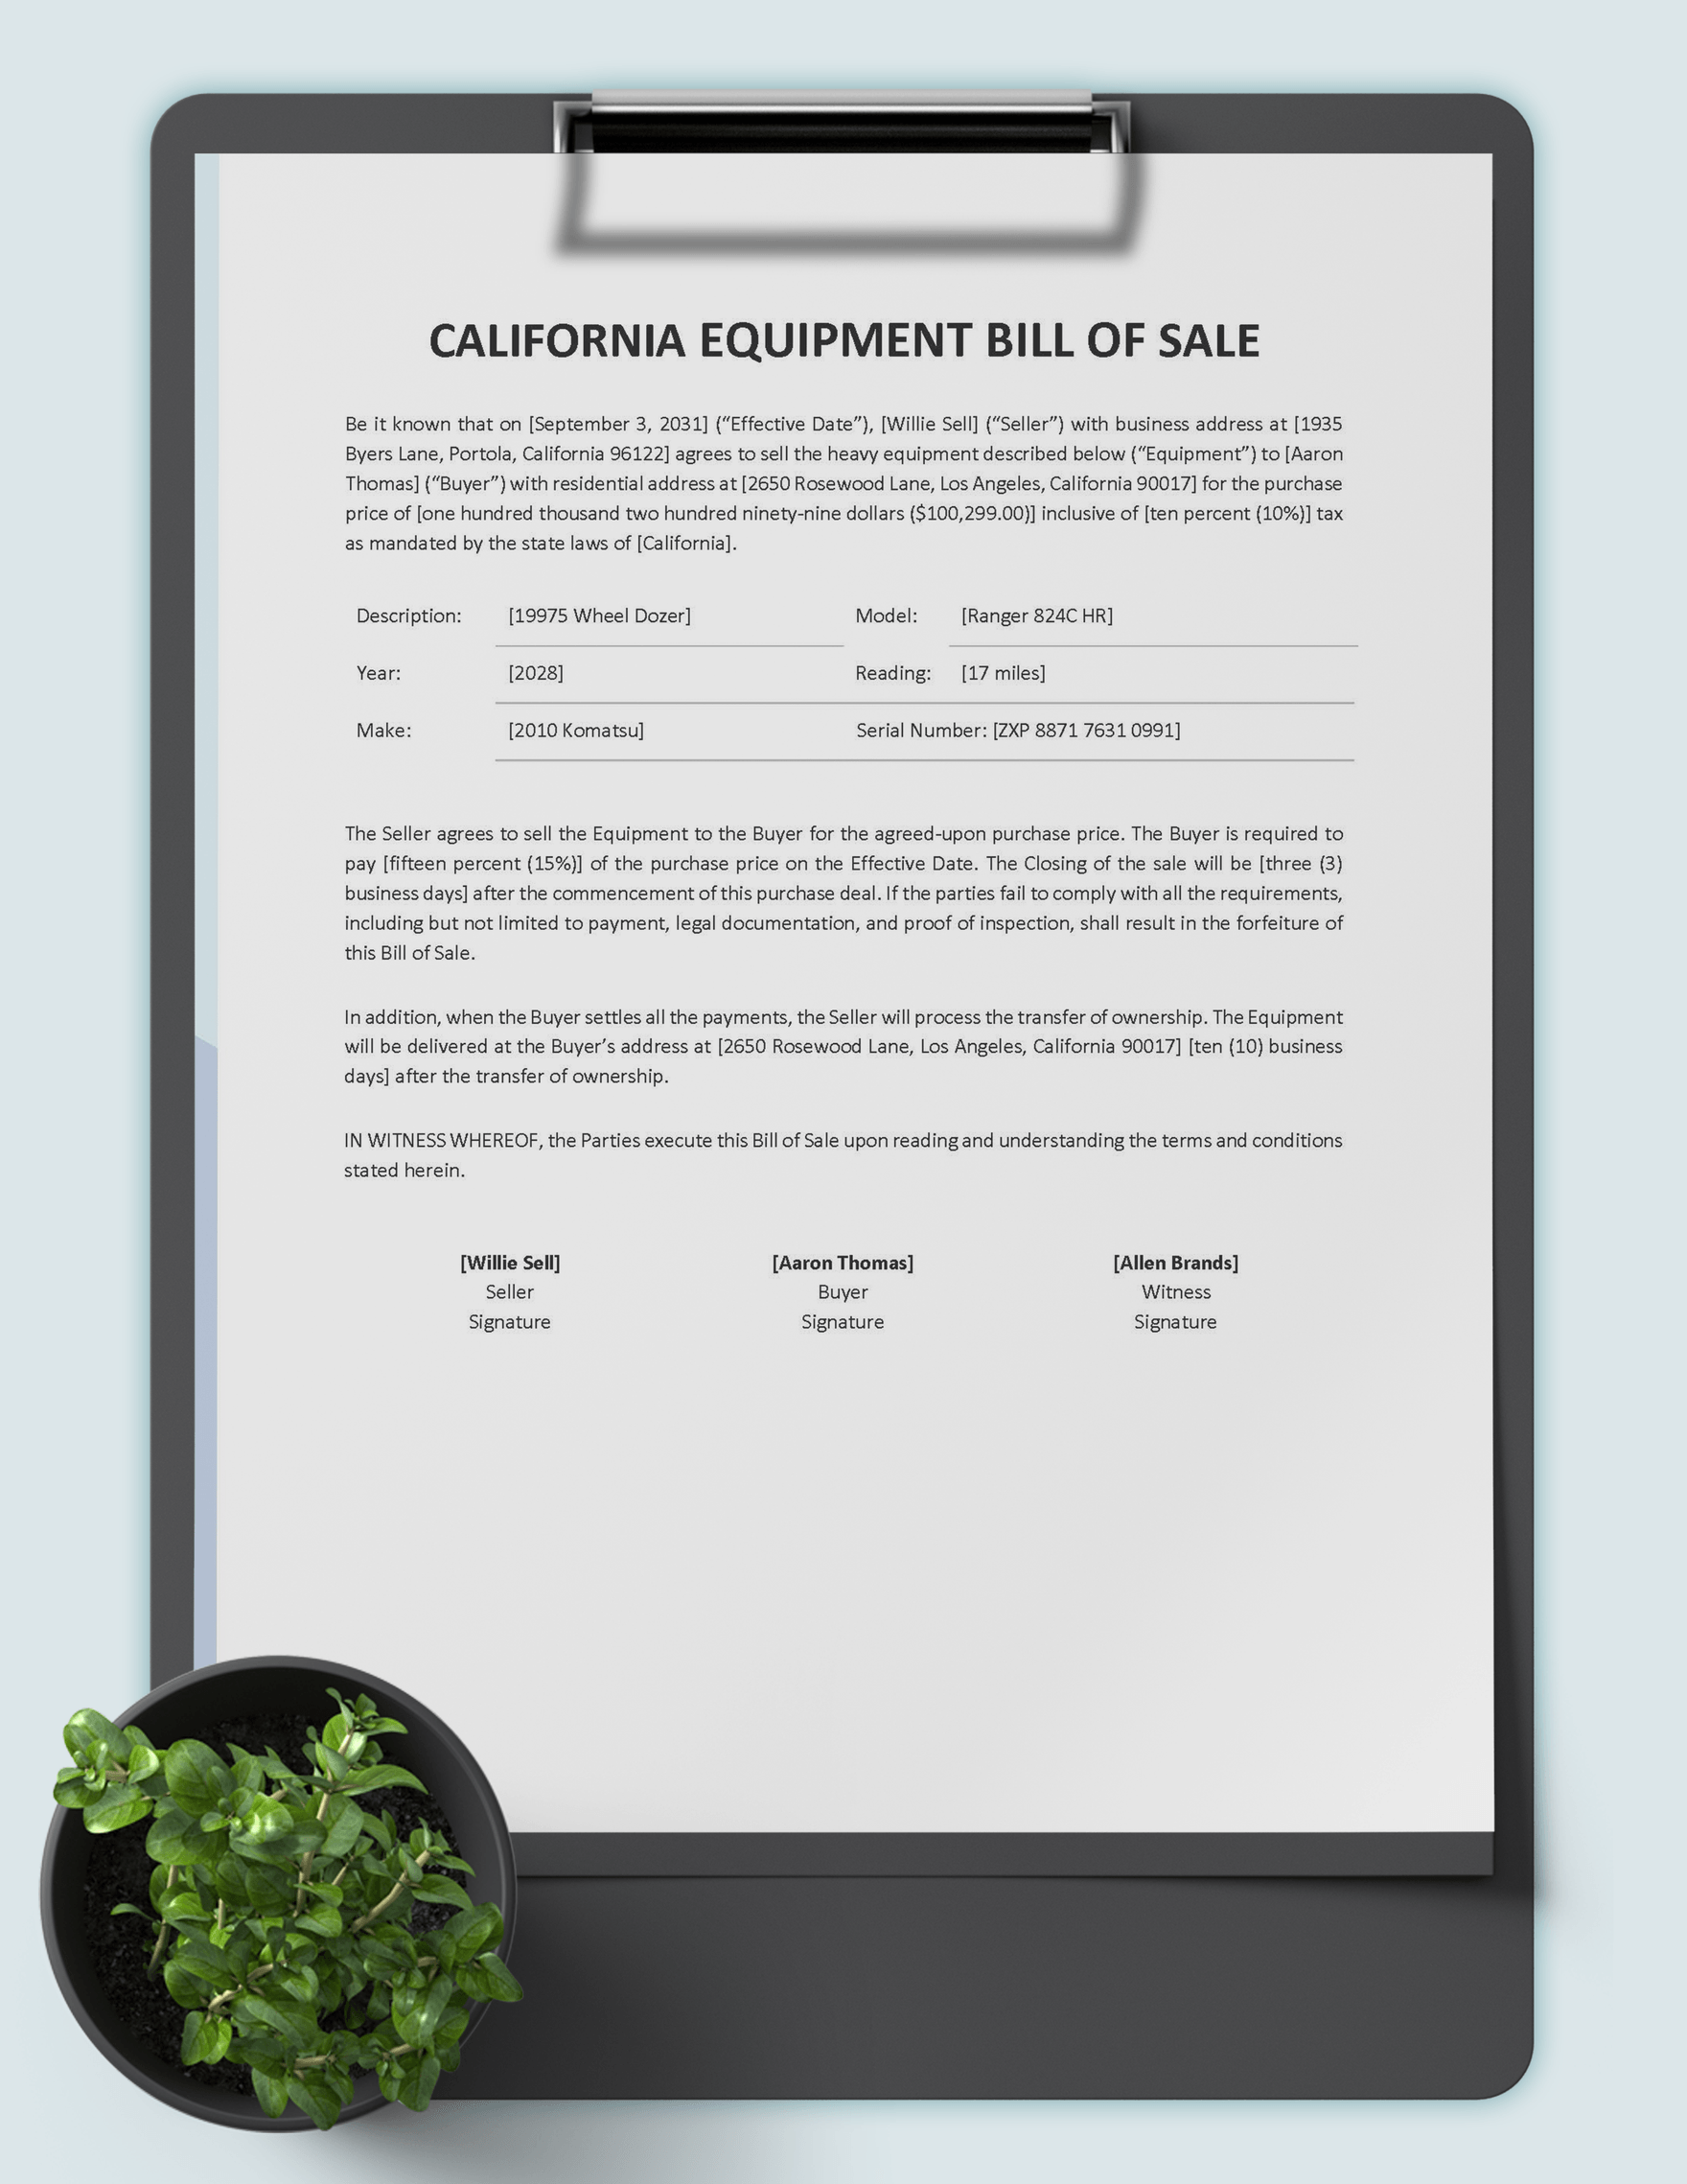 California Equipment Bill of Sale Template